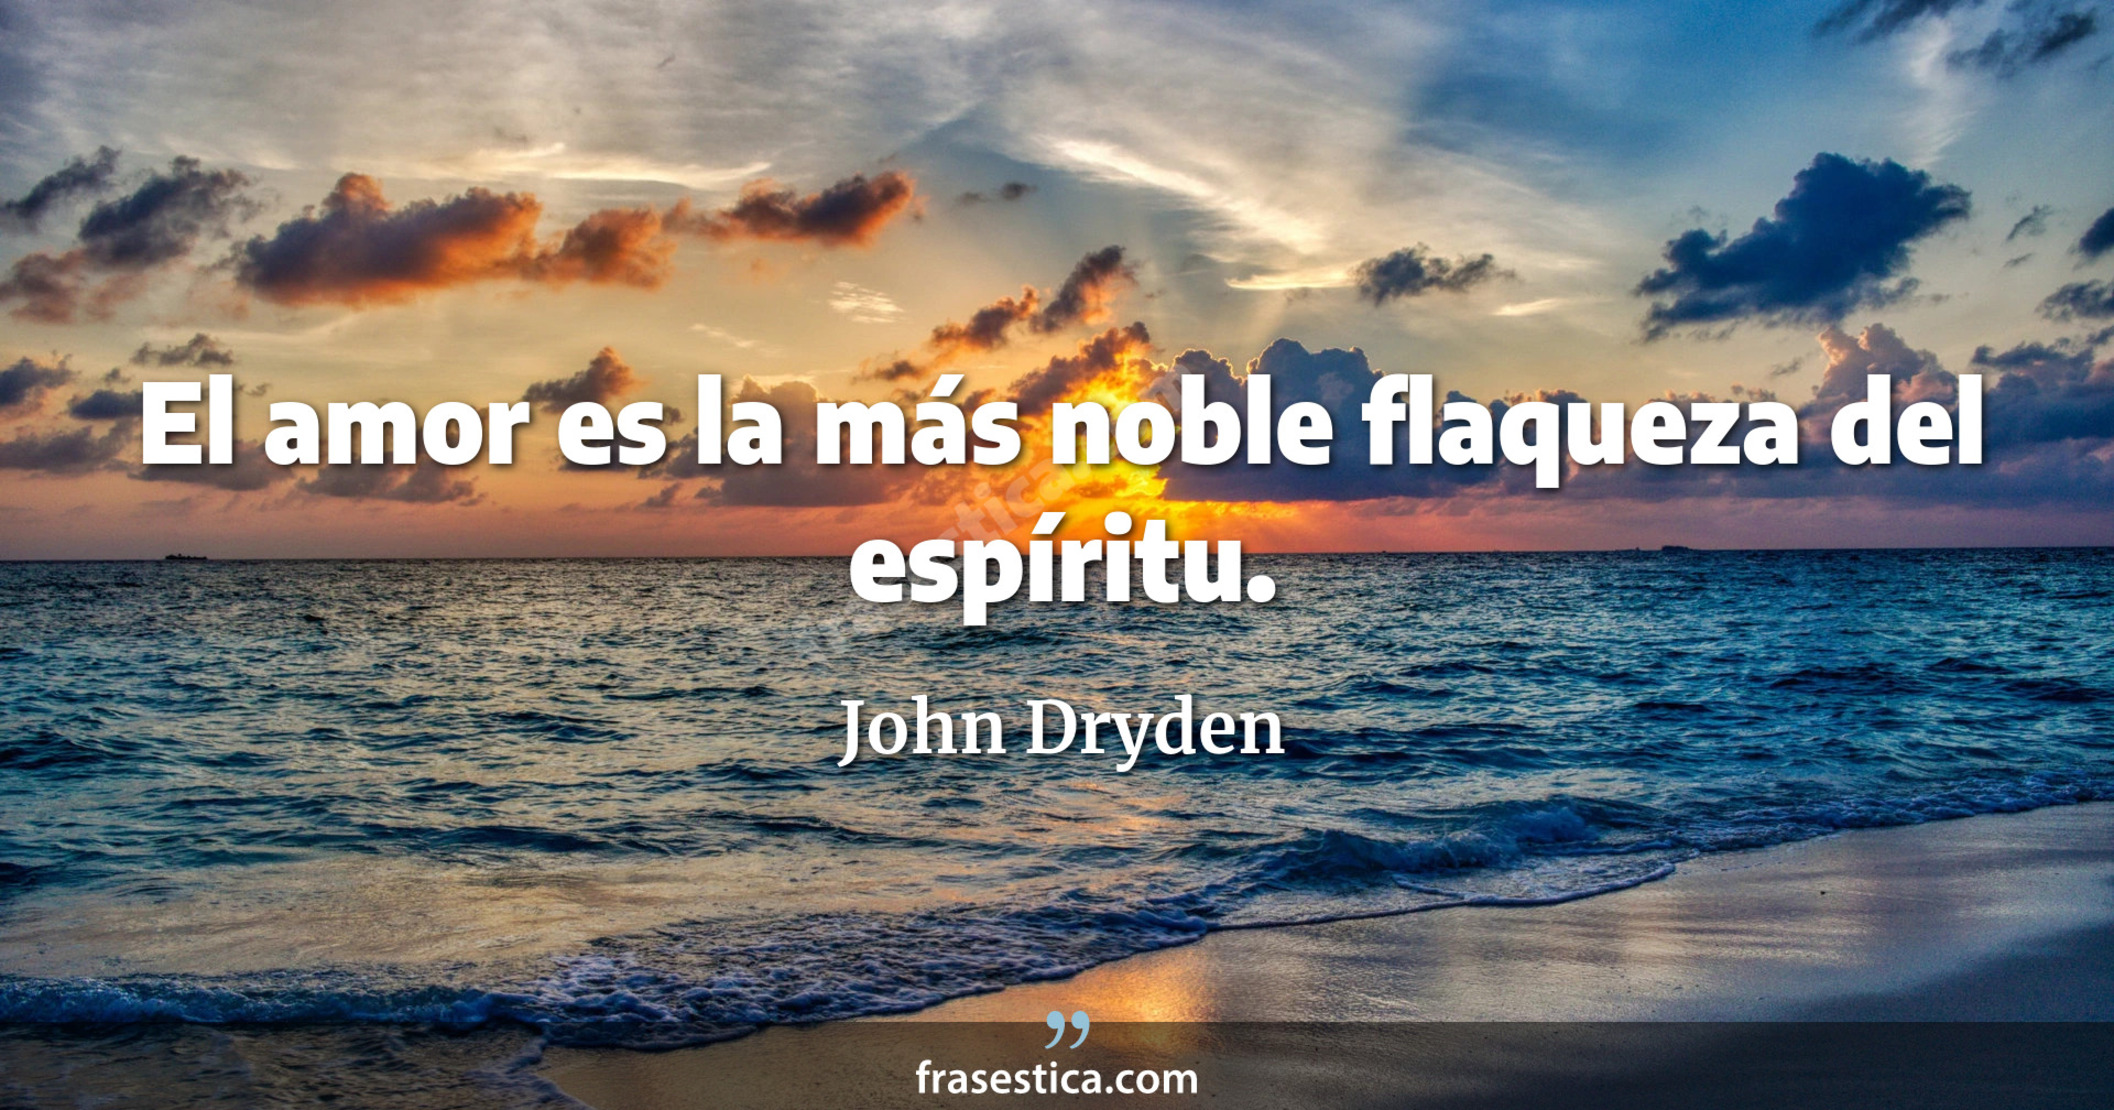 El amor es la más noble flaqueza del espíritu. - John Dryden